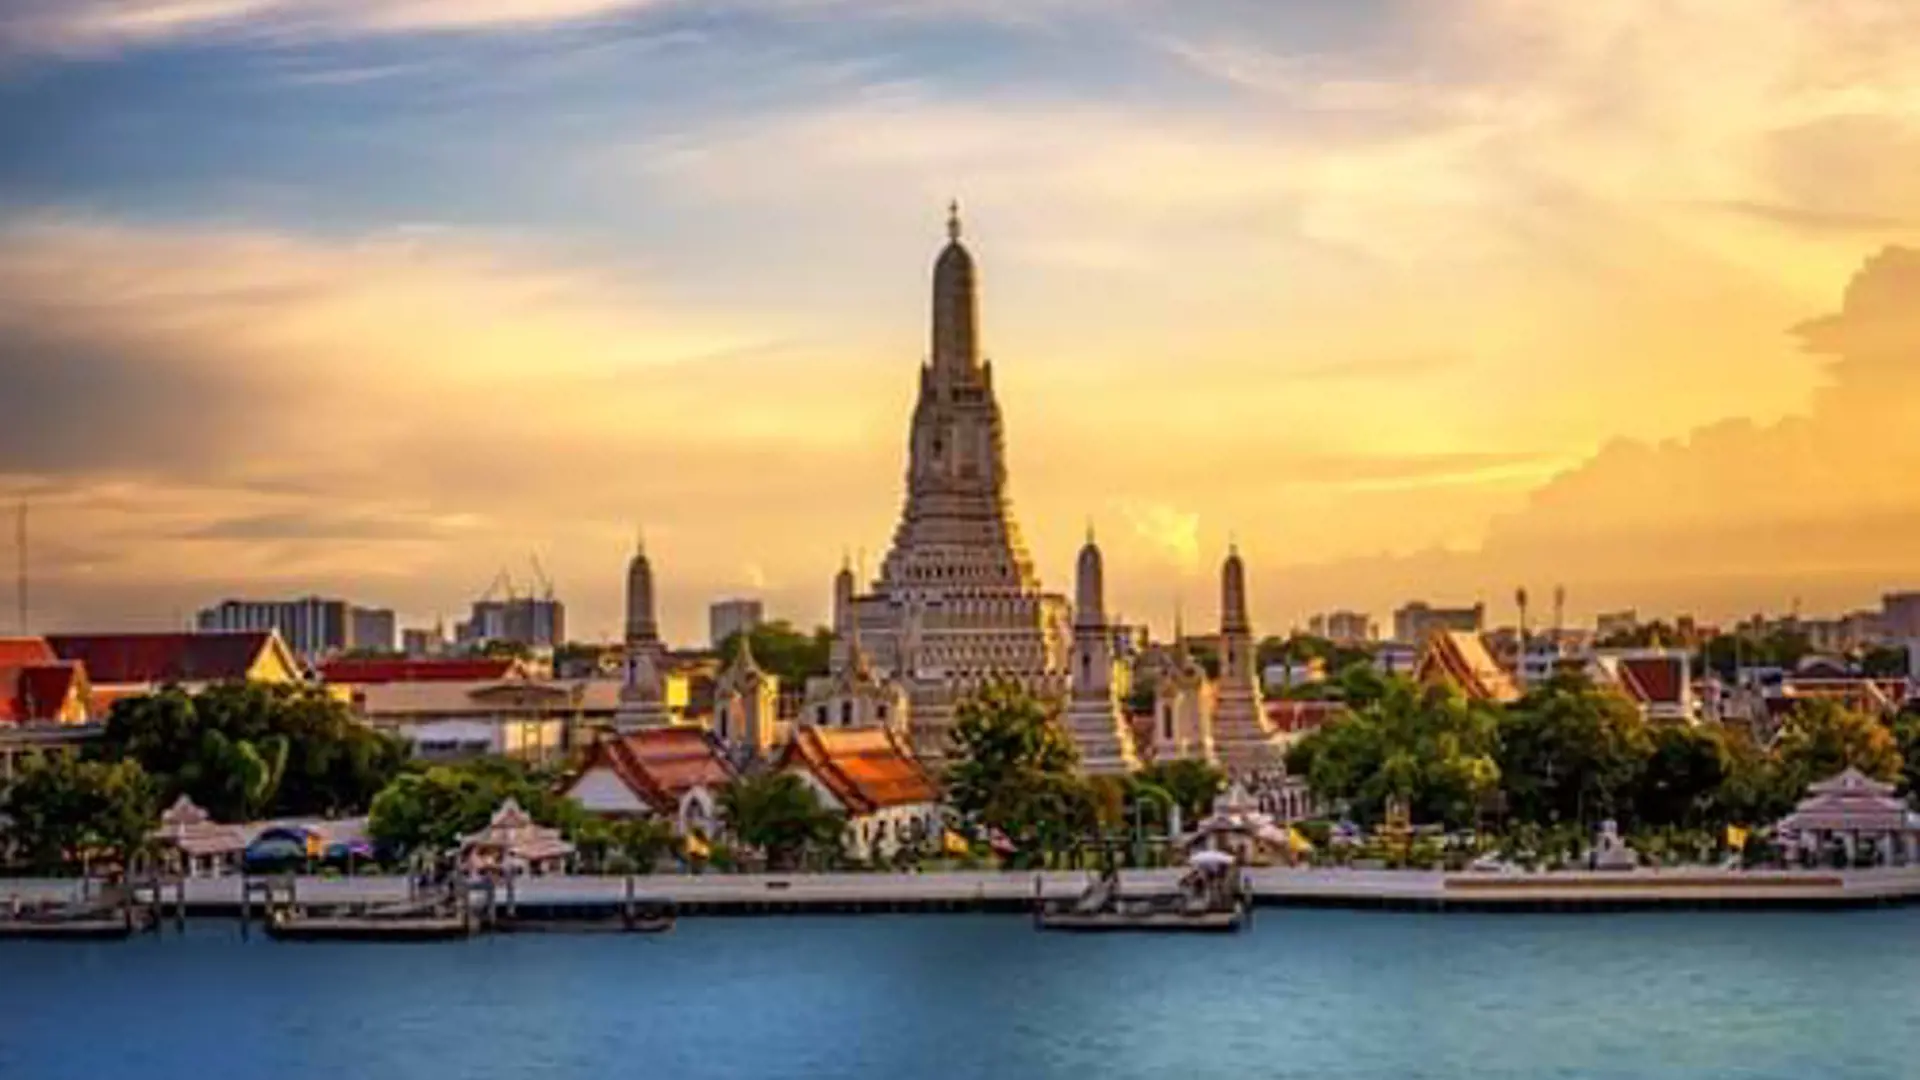 The Temple Chao Phraya Riverside The Famous Wat Arun